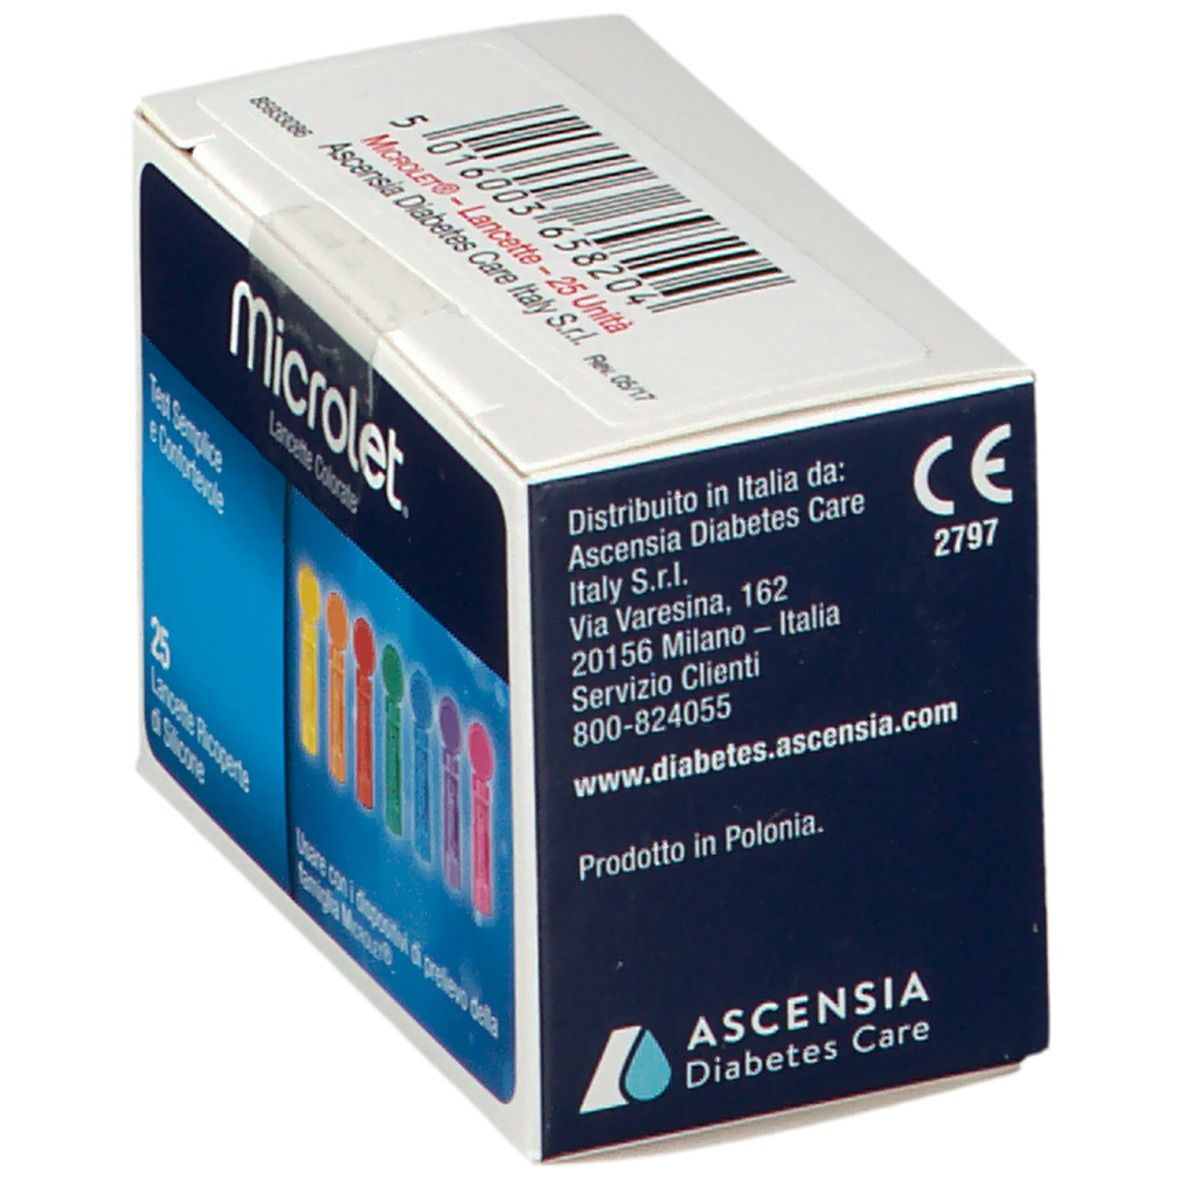 Microlet® Lancette colorate